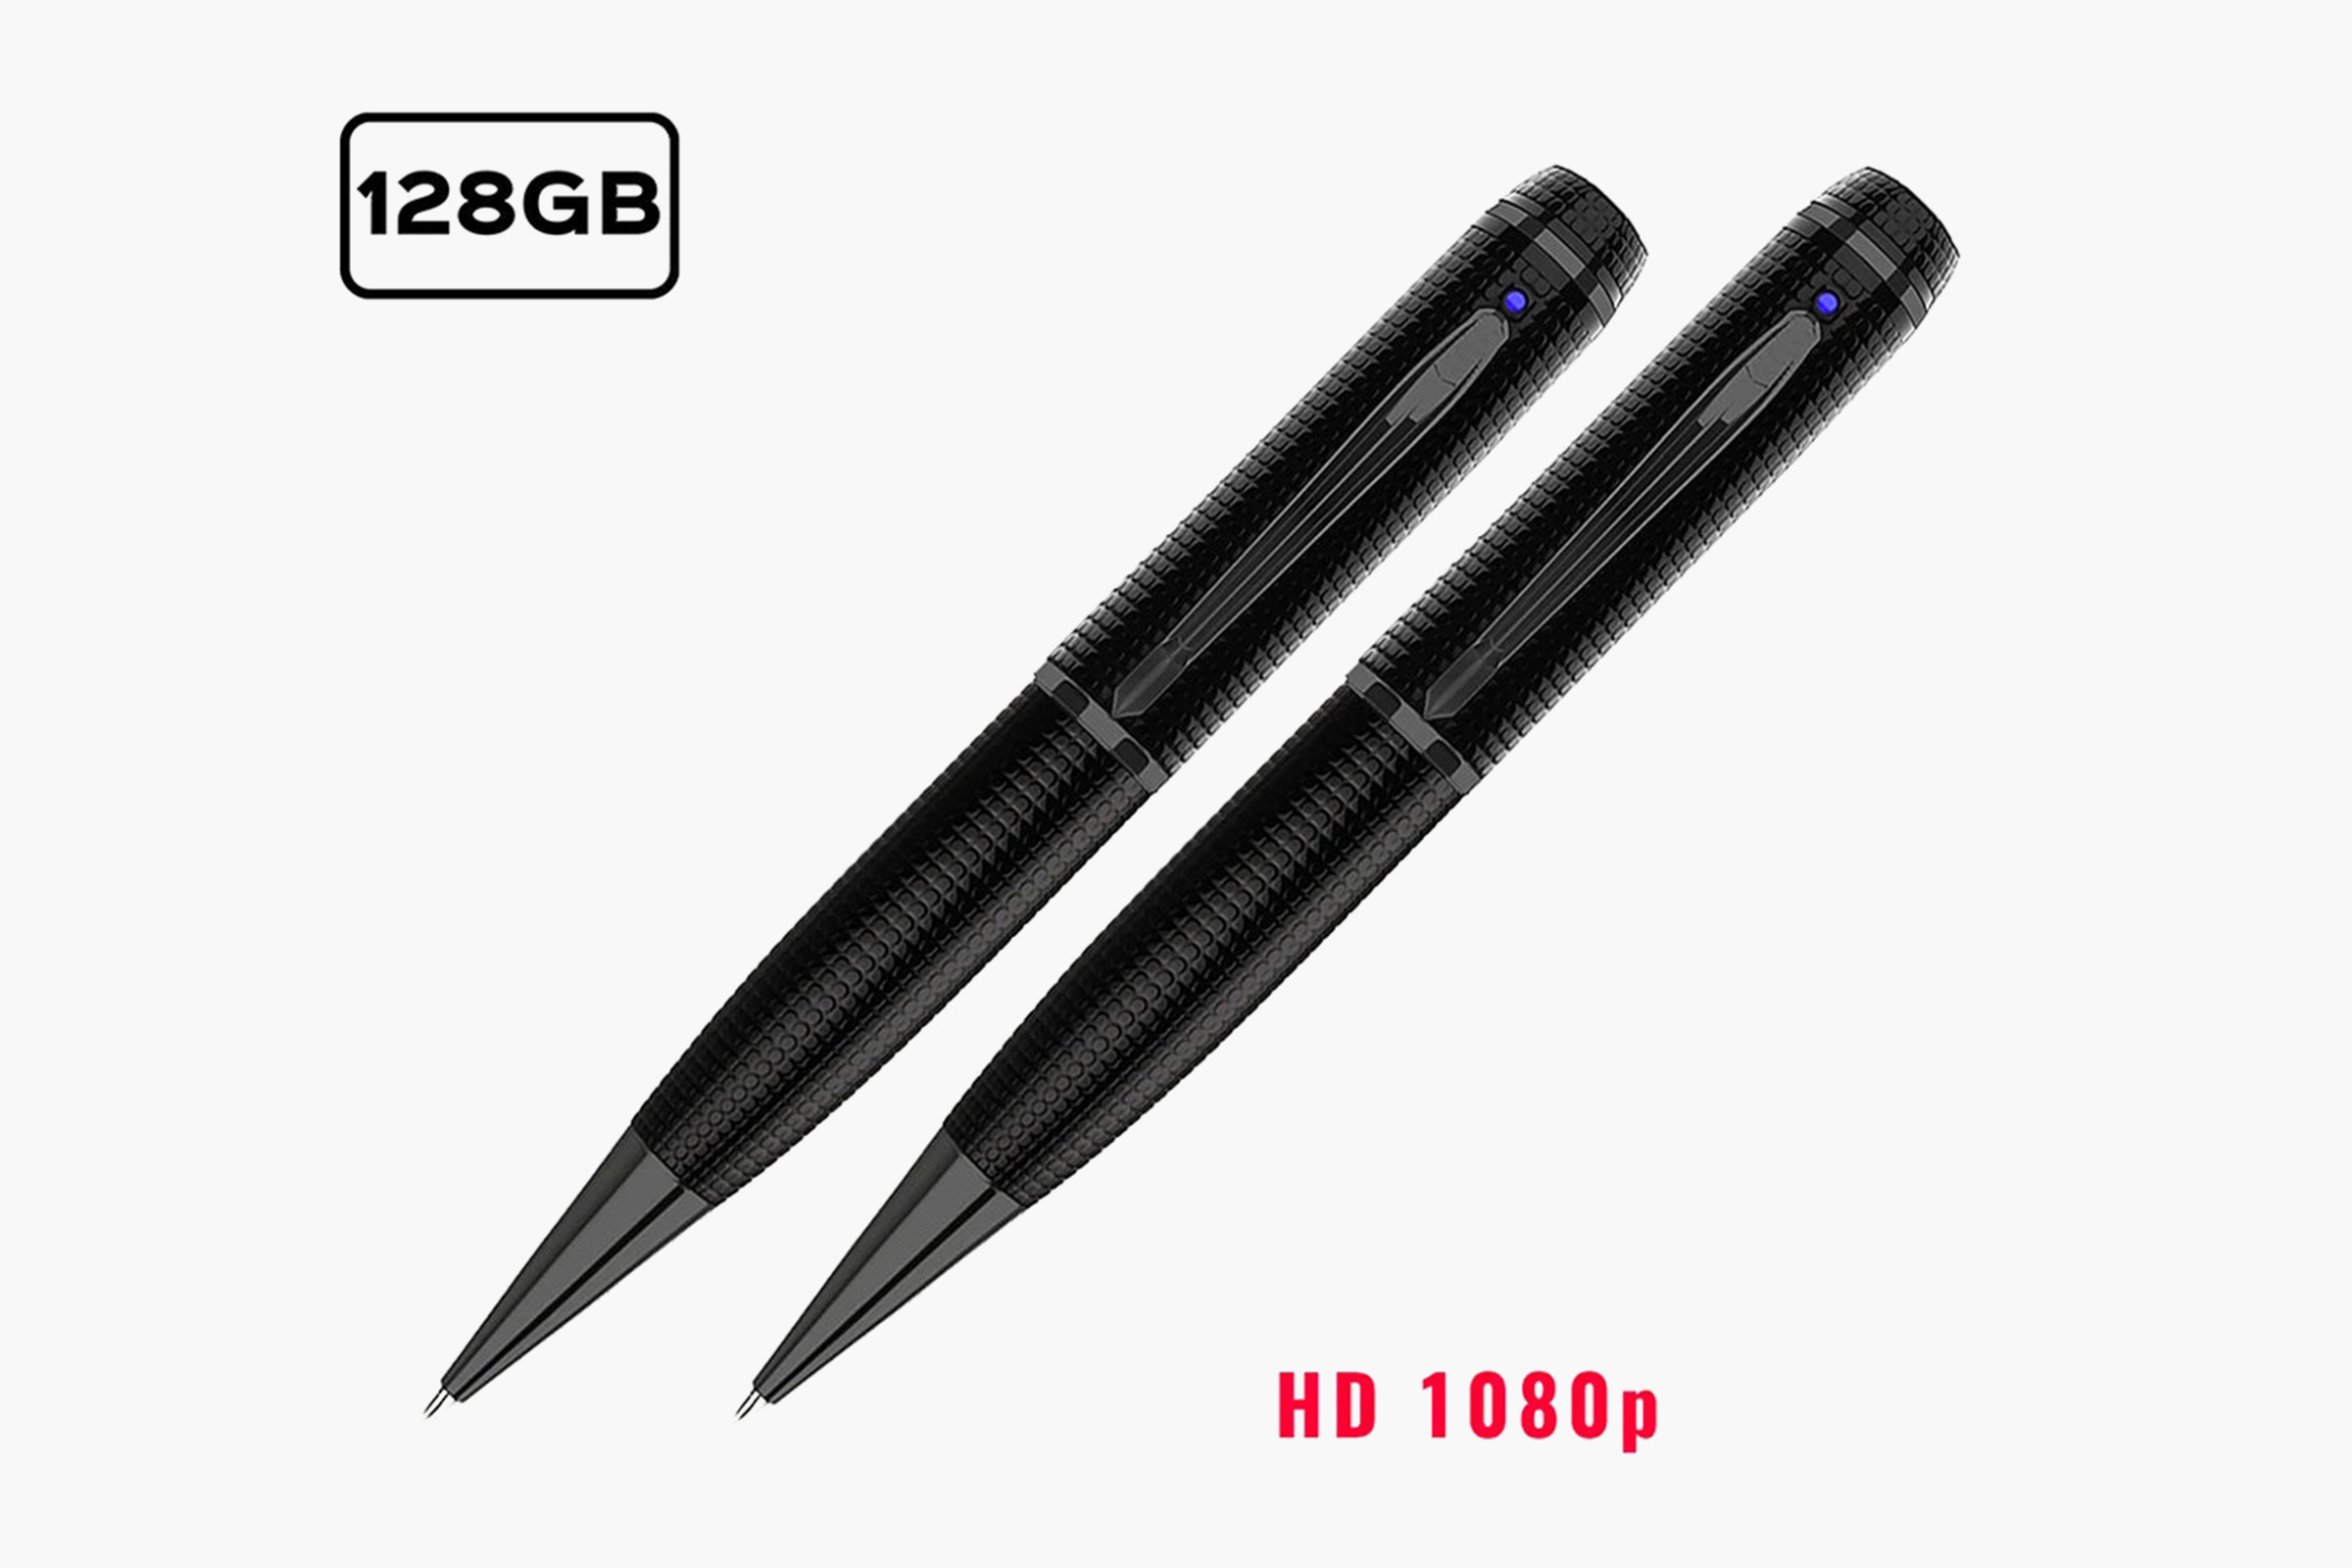 iSpyPen Pro Camera Pen